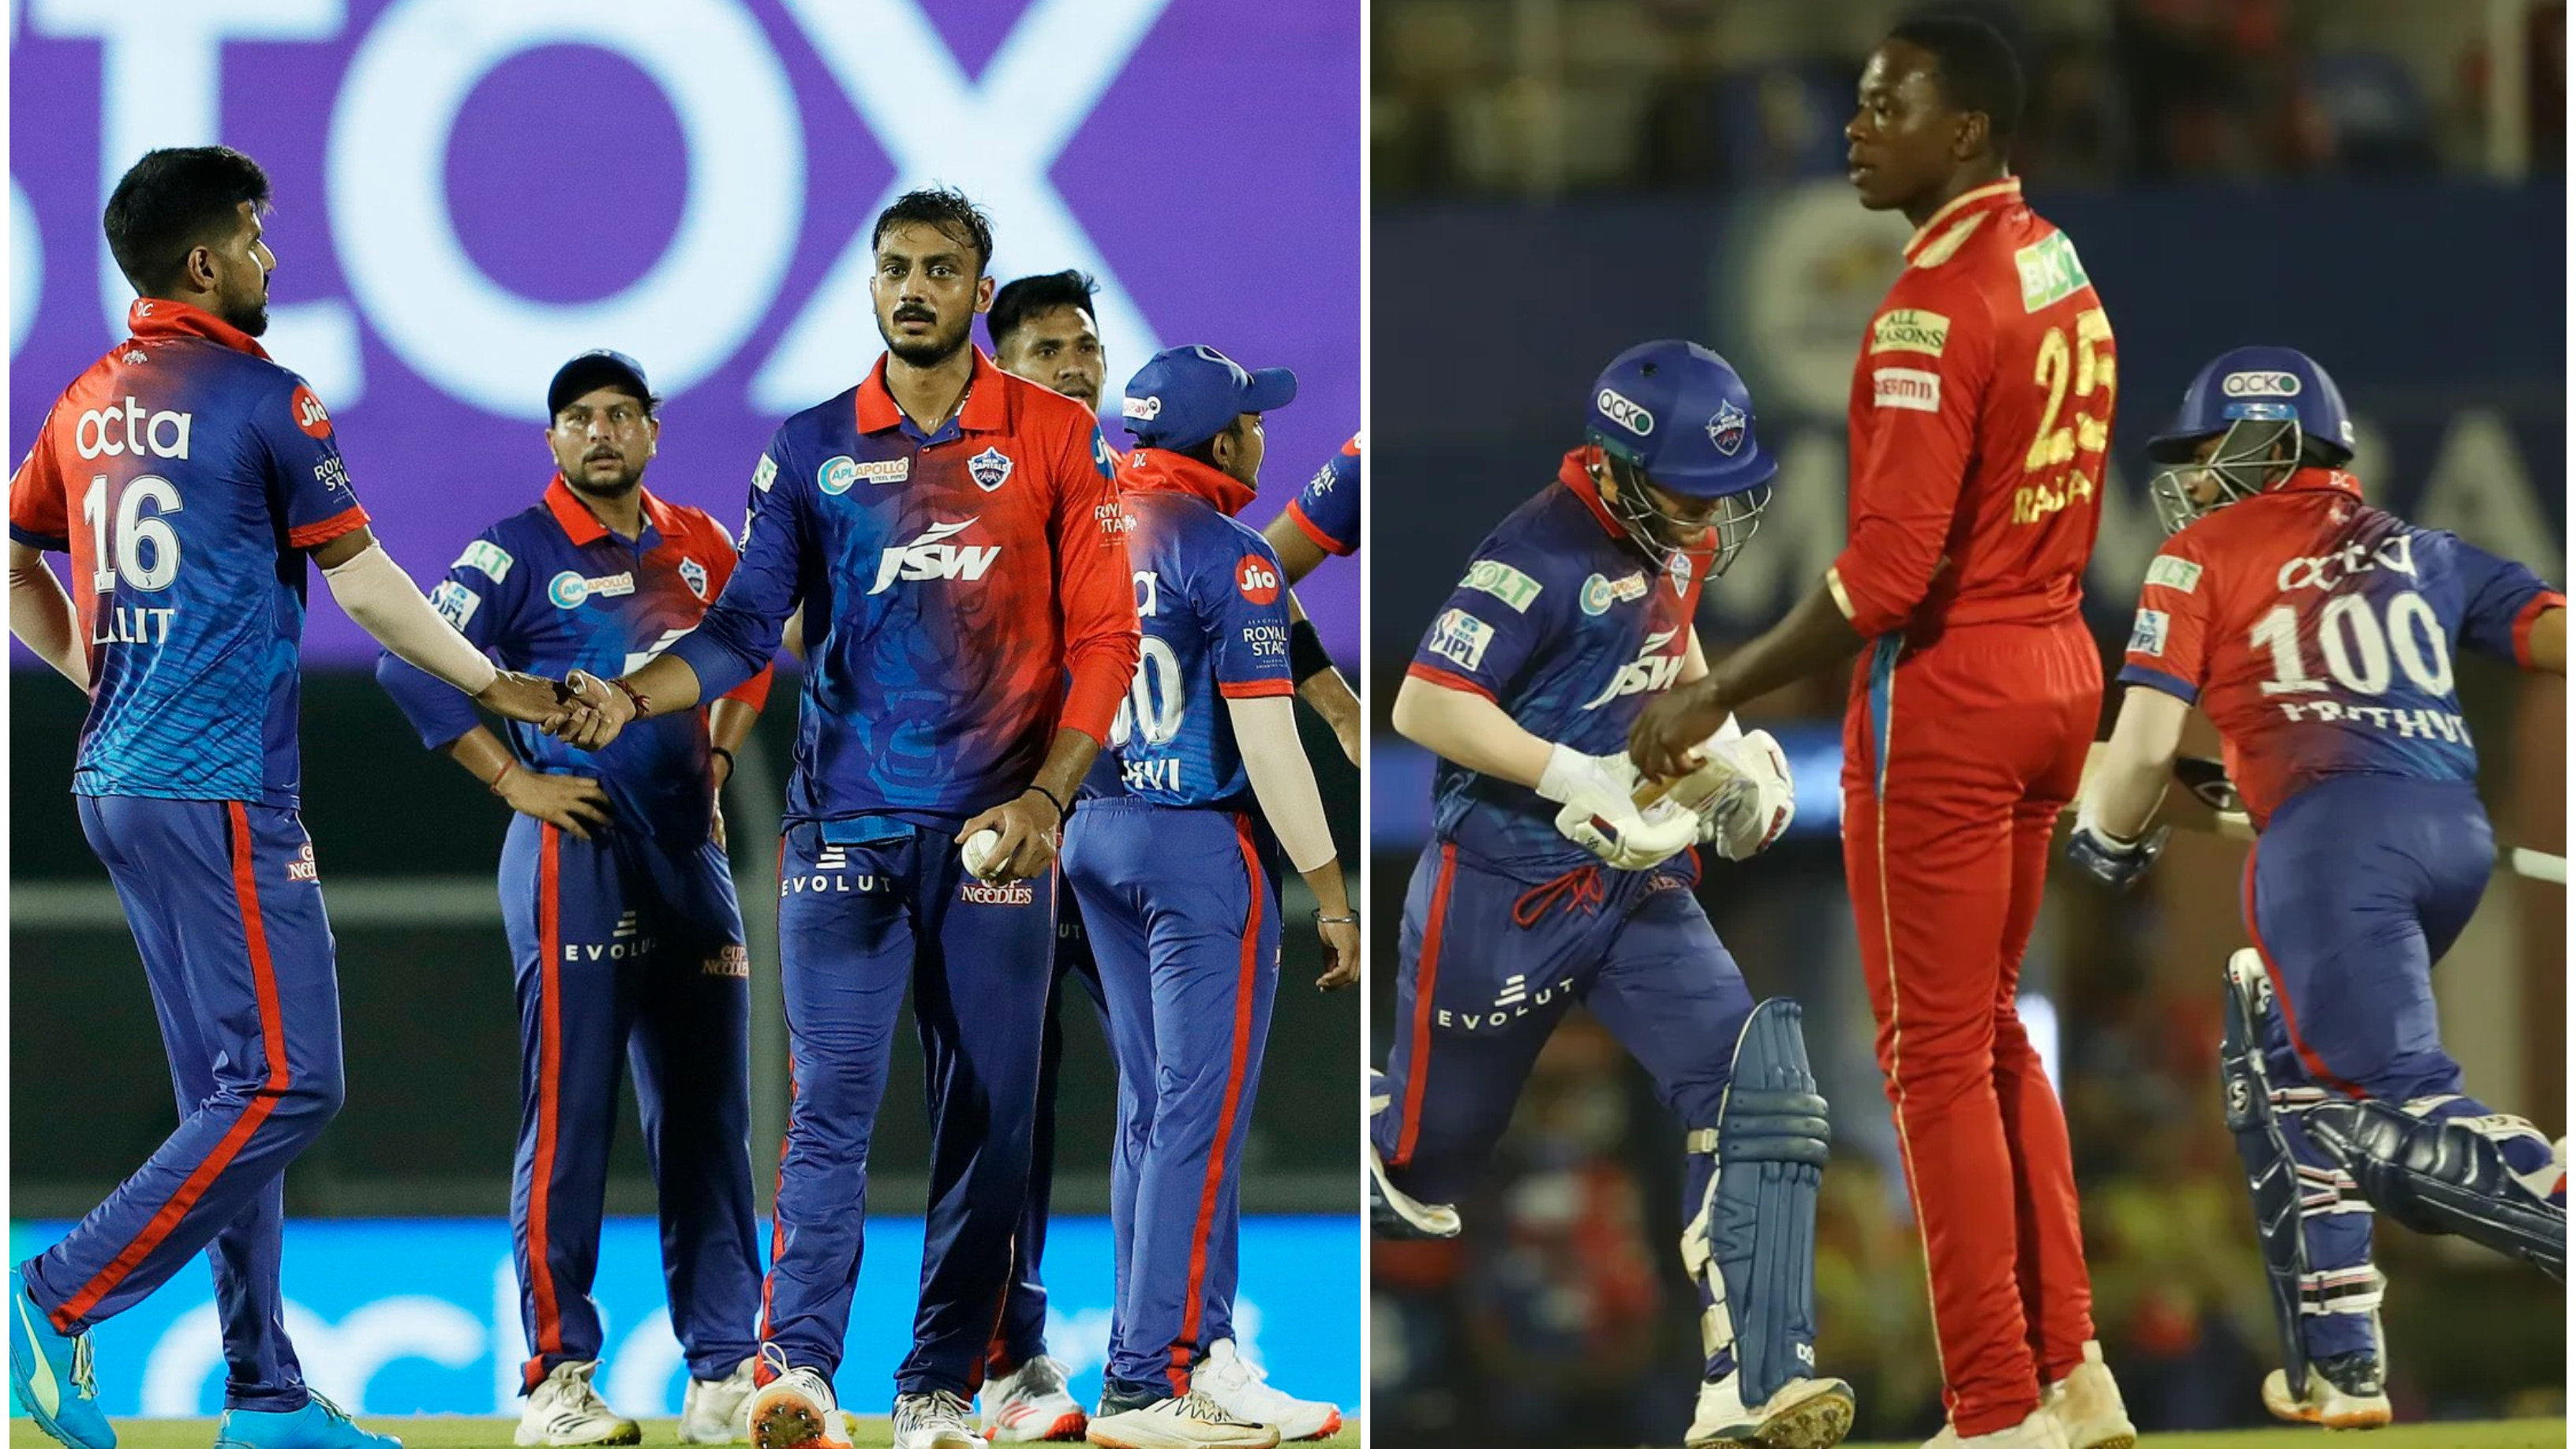 IPL 2022: Bowlers, openers shine in Delhi Capitals’ resounding win over Punjab Kings